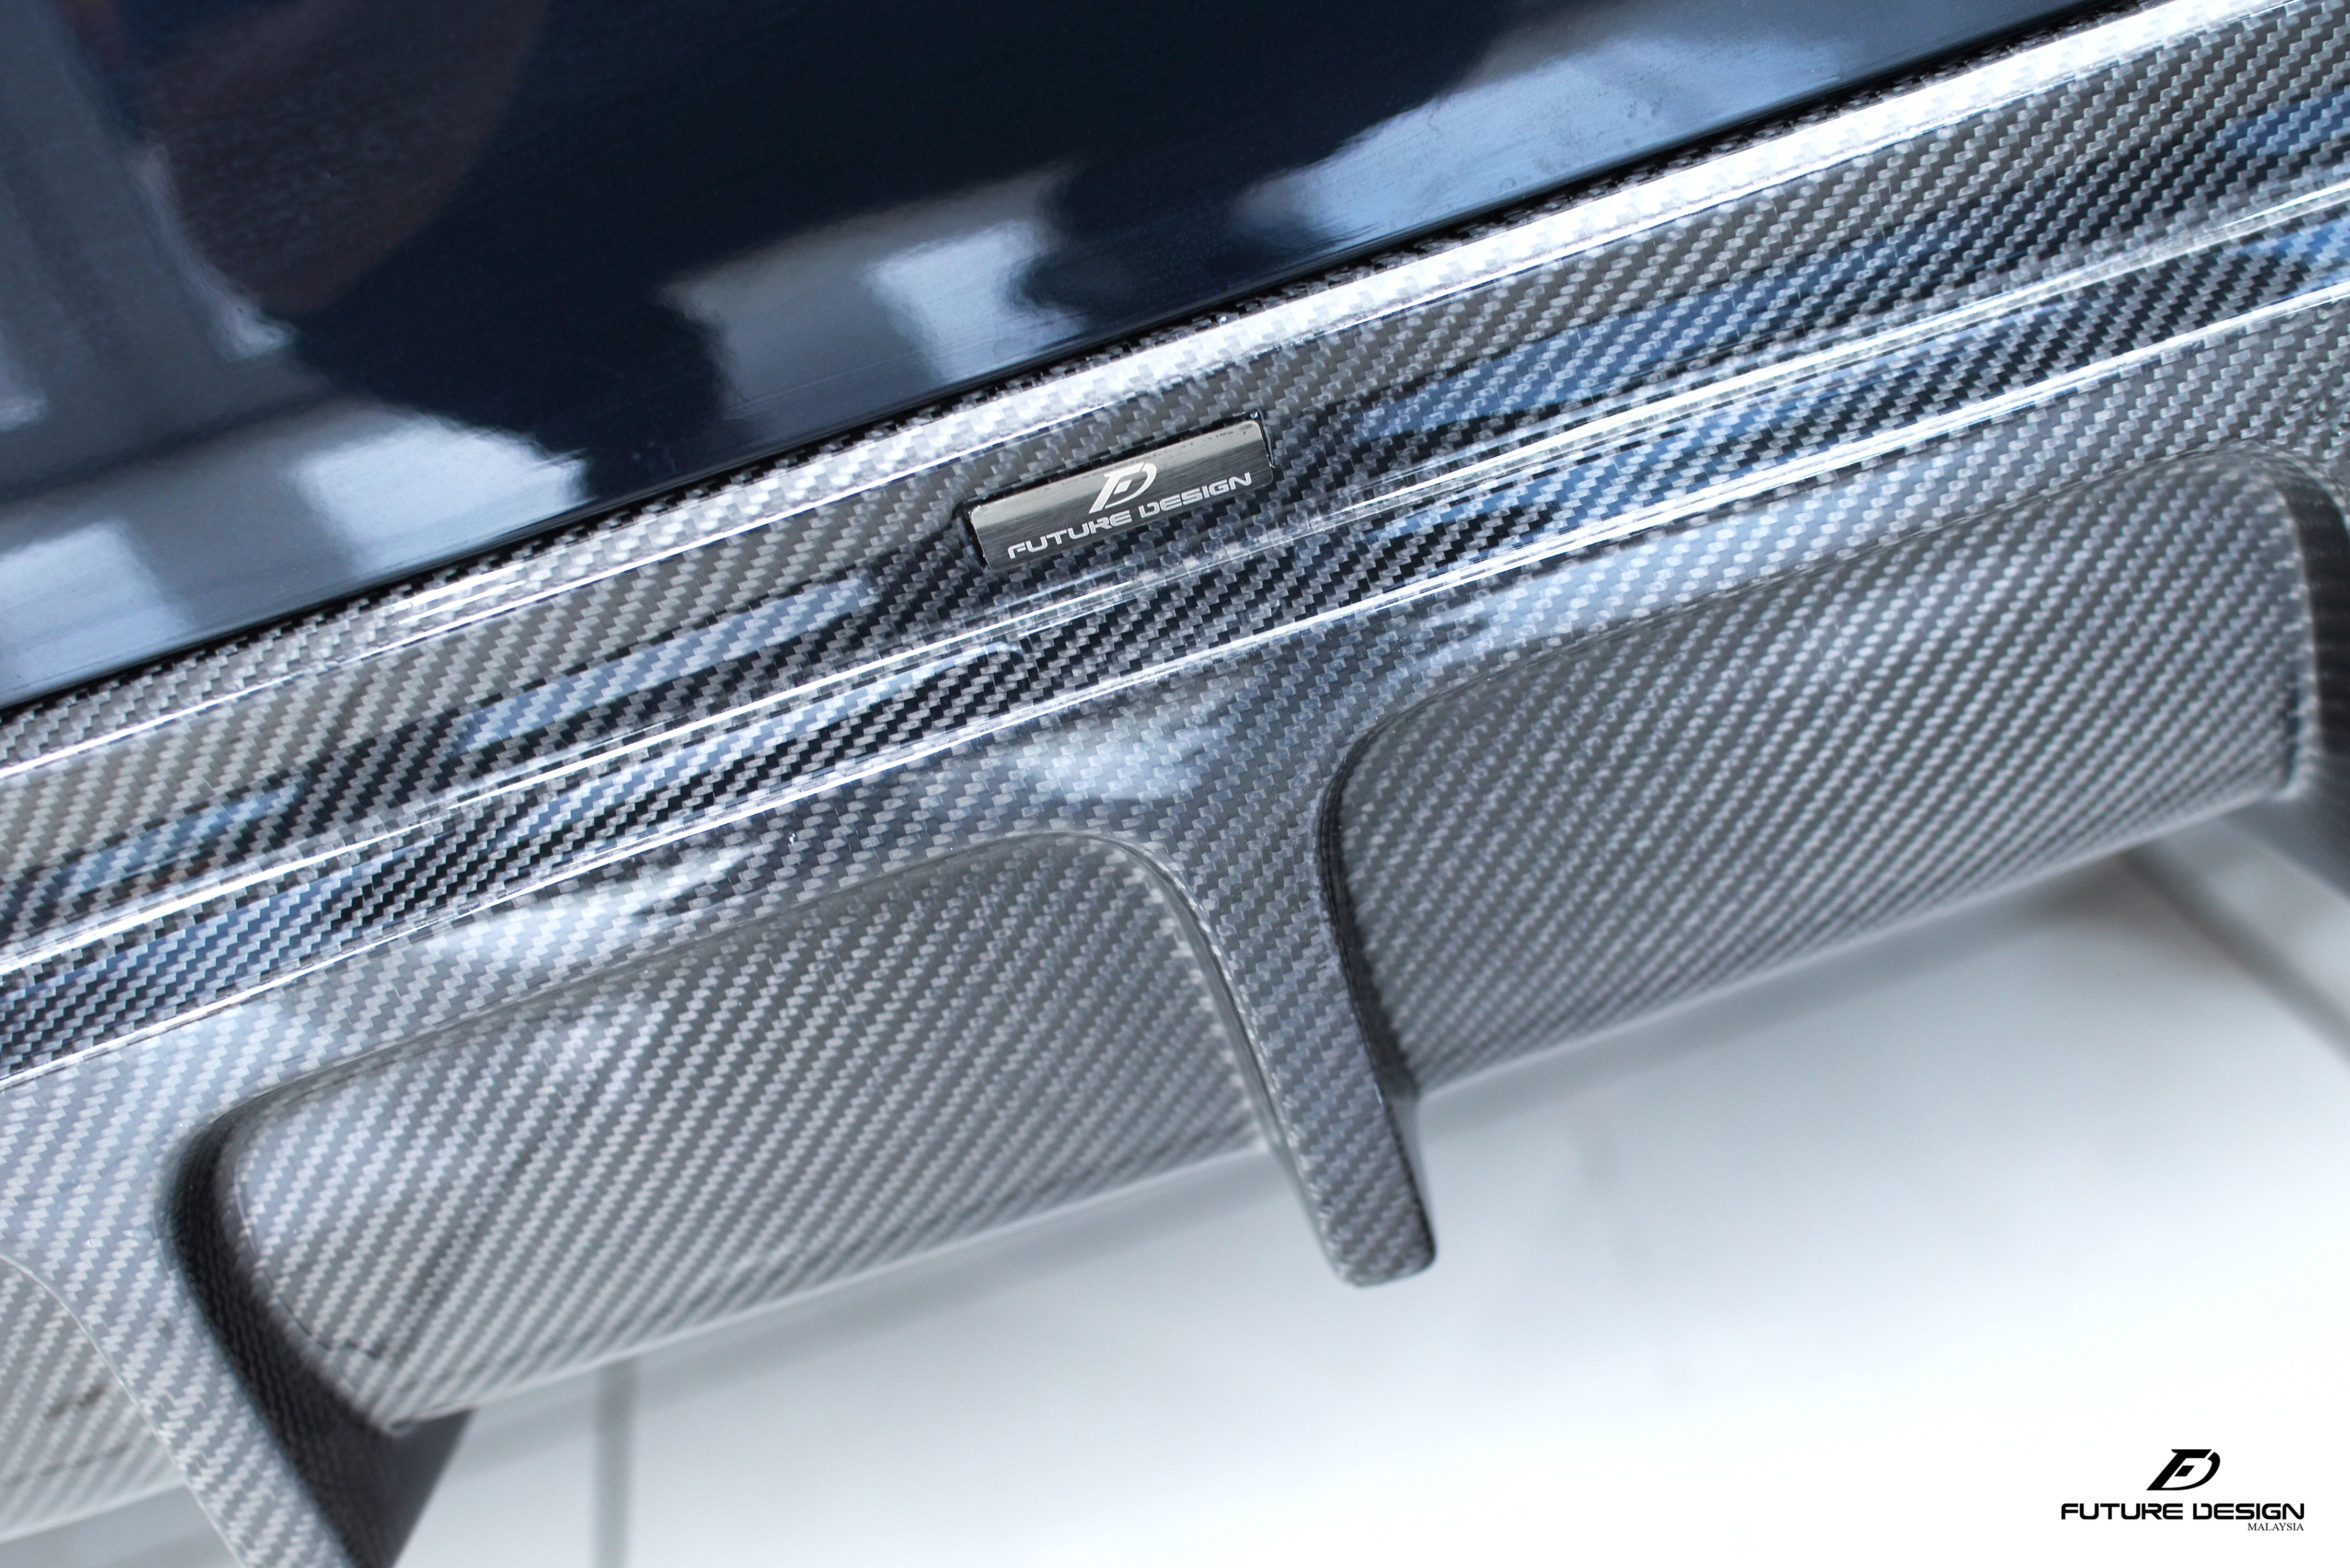 Future Design Carbon Carbon Fiber Rear Diffuser FD Style For BMW 5 Series G30 530i 540i 2017-2020